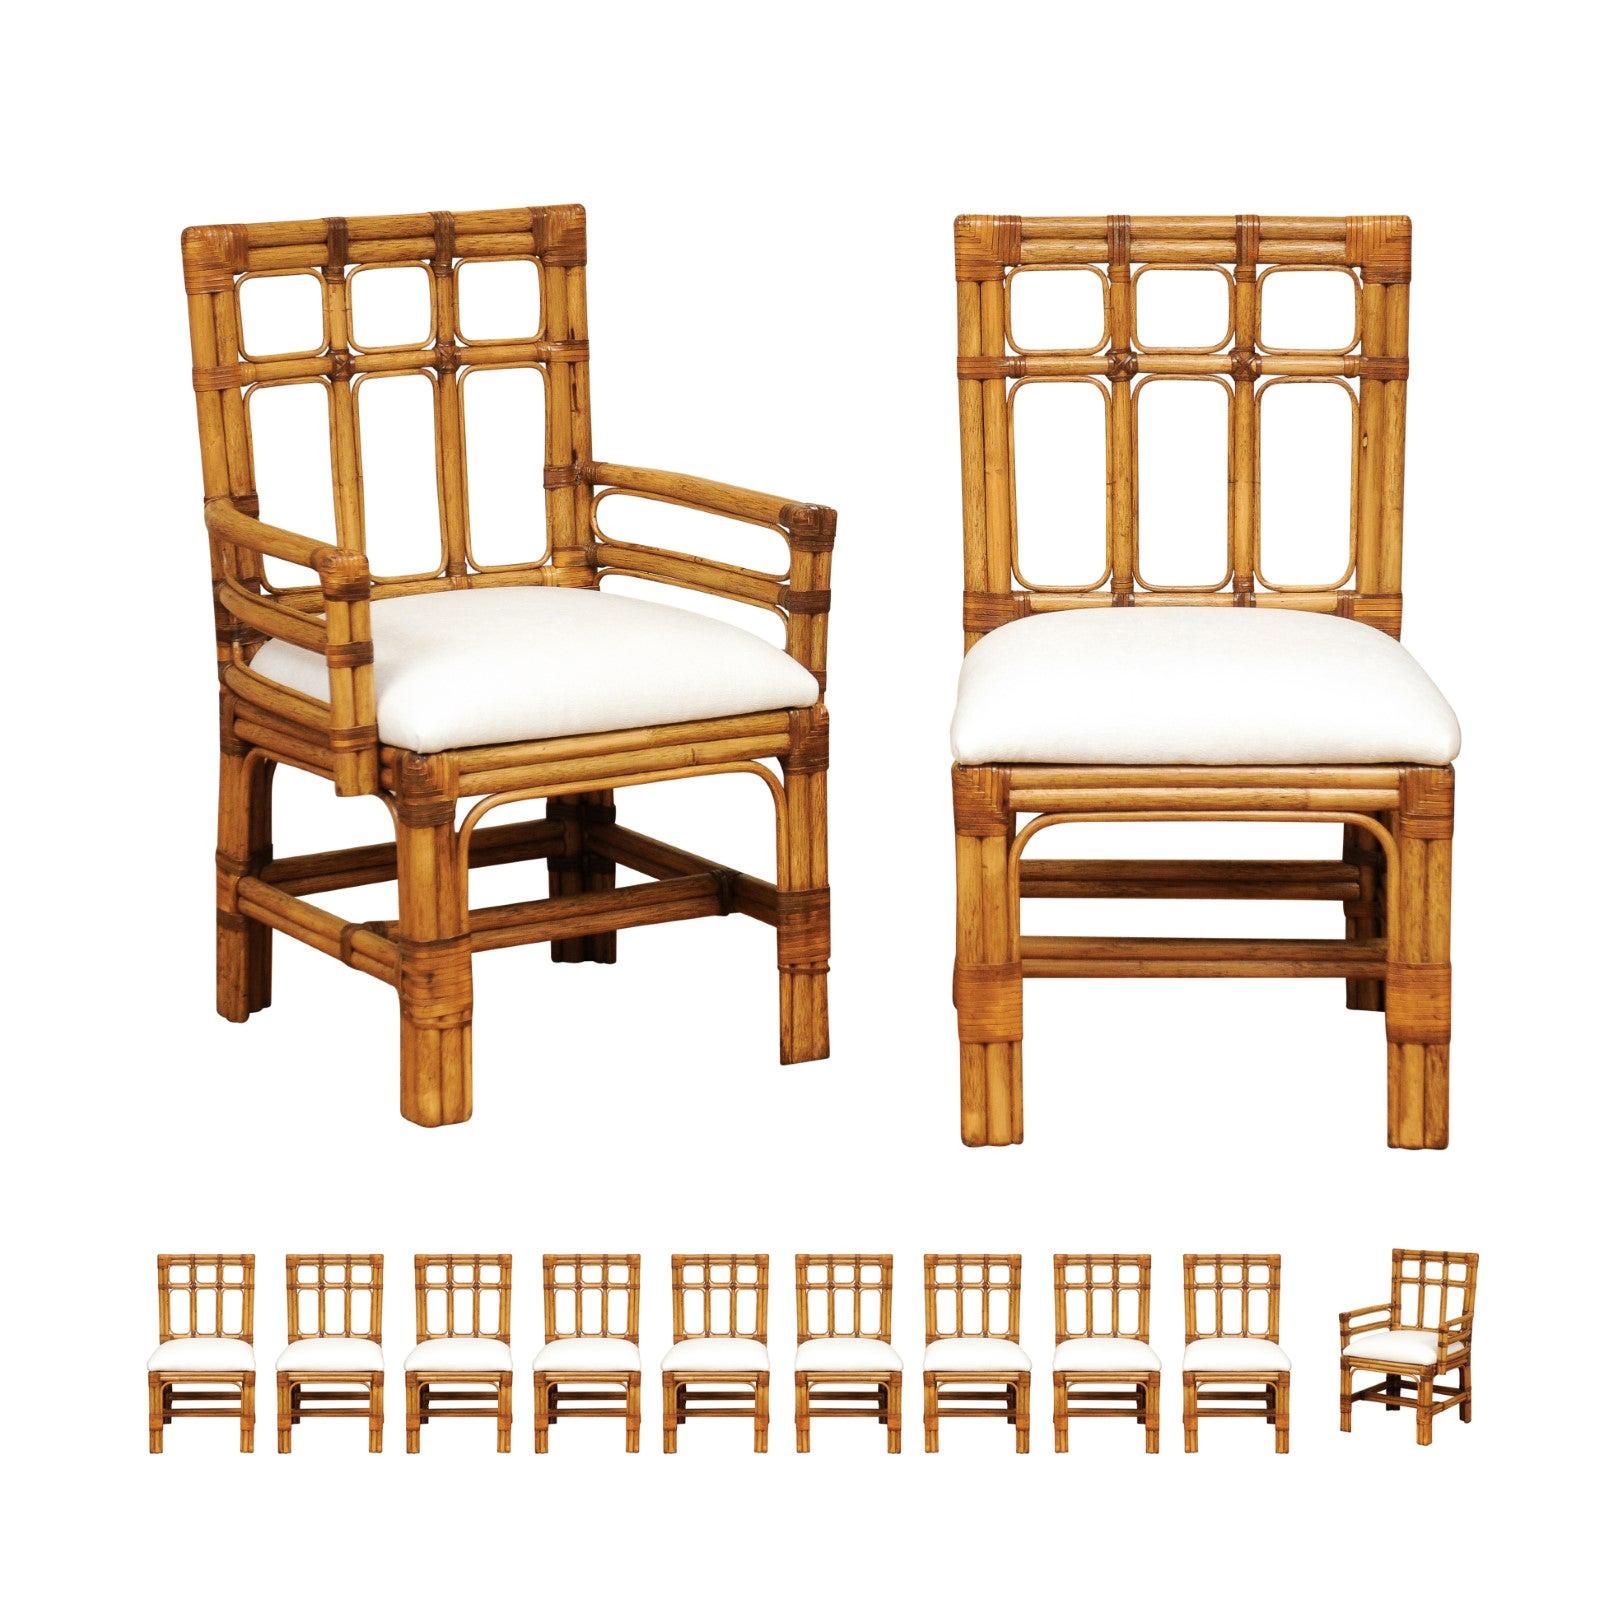 Majestic Set of 12 Greene & Greene Inspired Chairs by Brown Jordan, circa 1980